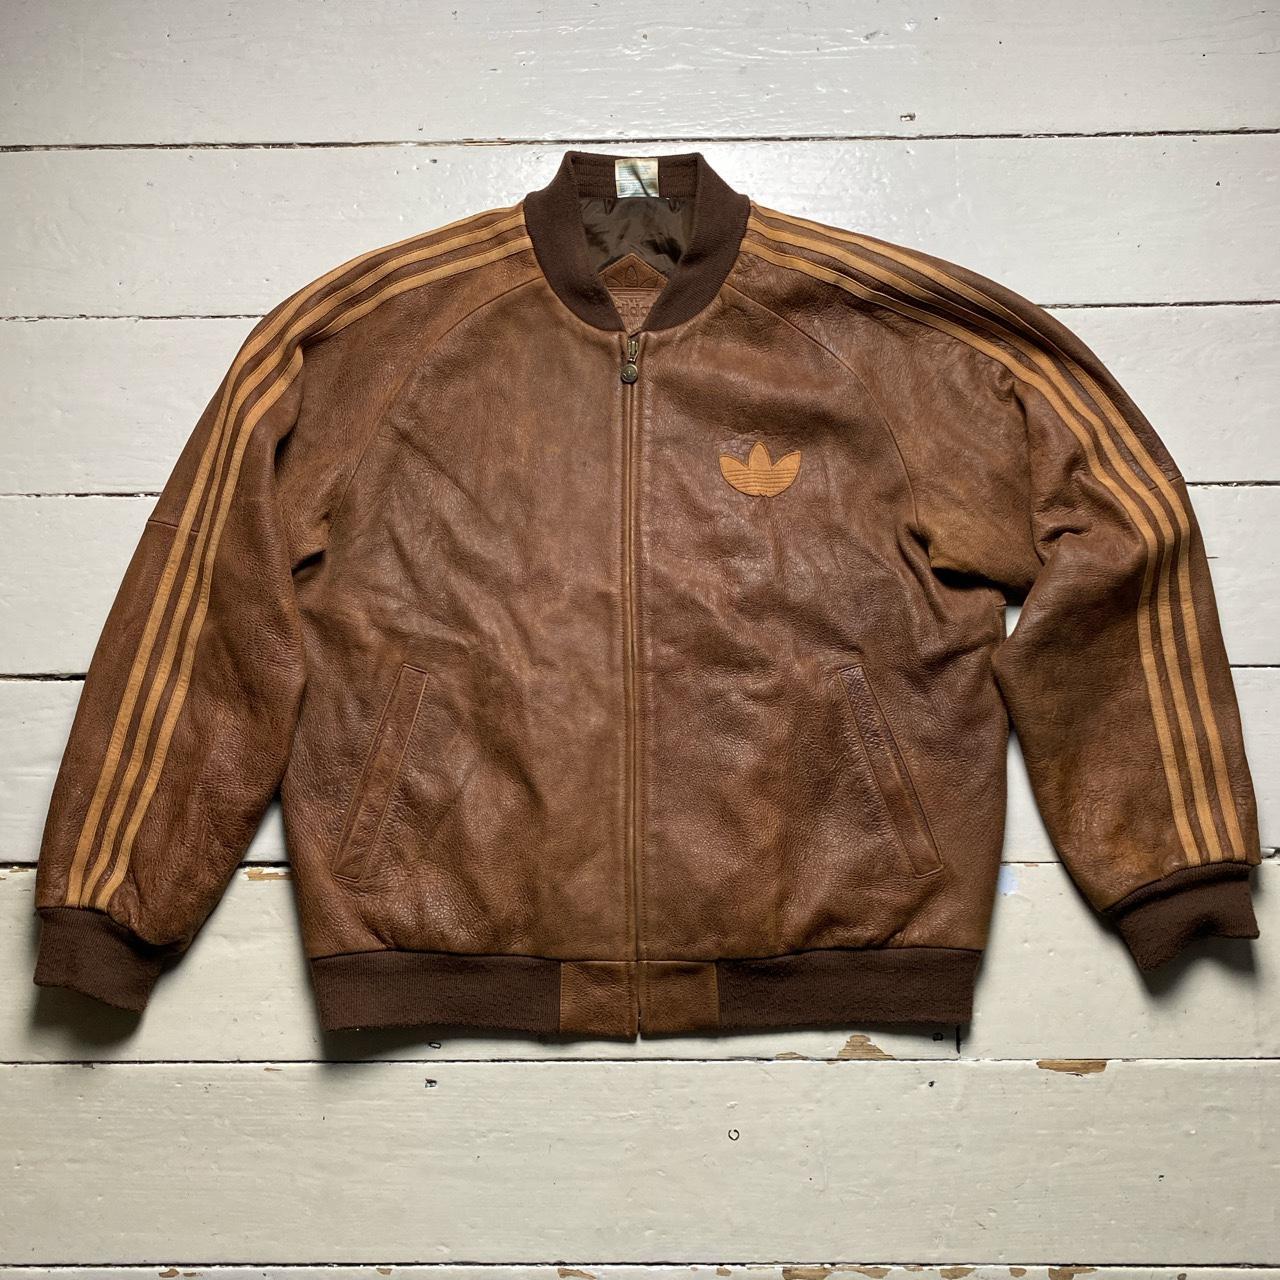 Adidas Originals A-15 80’s - 90’s Brown Vintage Leather Bomber Jacket